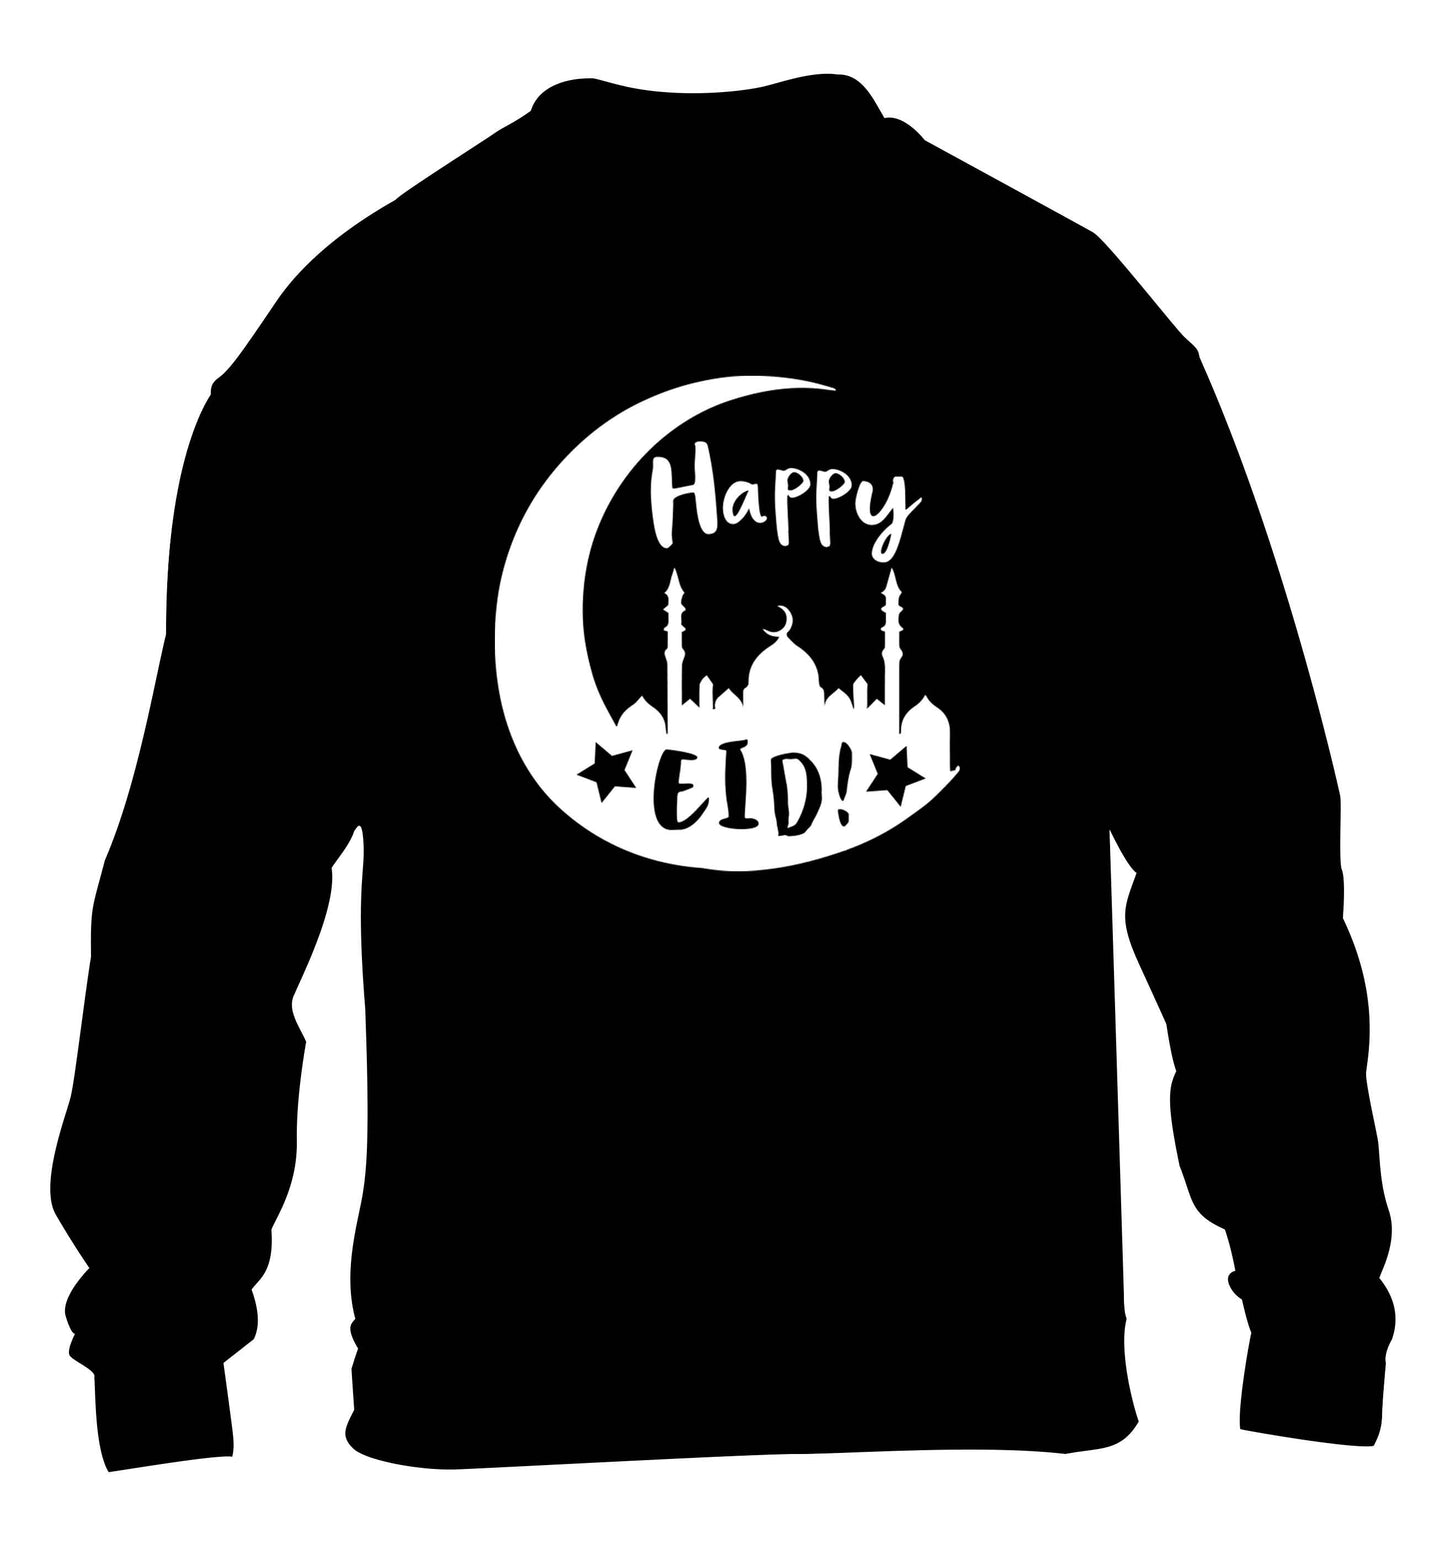 Happy Eid children's black sweater 12-13 Years